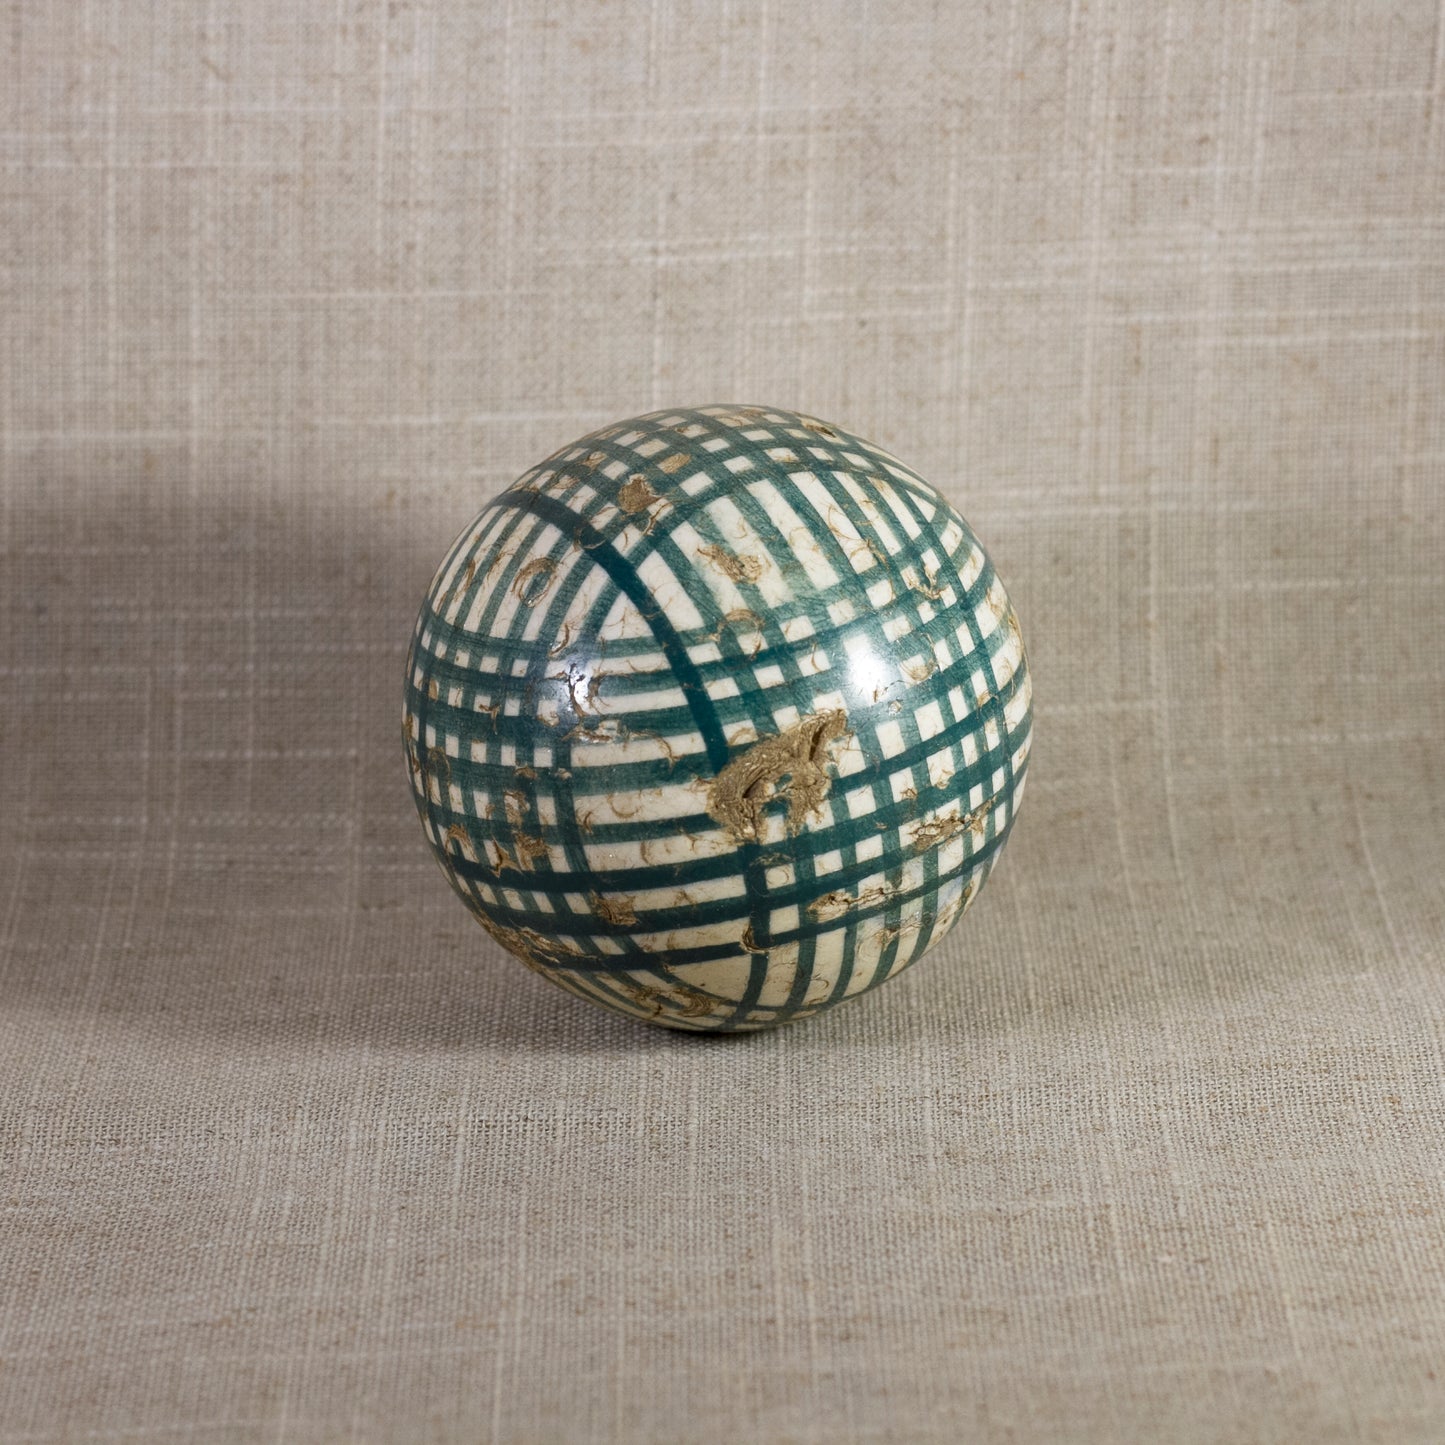 Antique VICTORIAN CARPET BALL with Green Glaze Multiple Crossbands Design 3” Circa 1860 - 1890